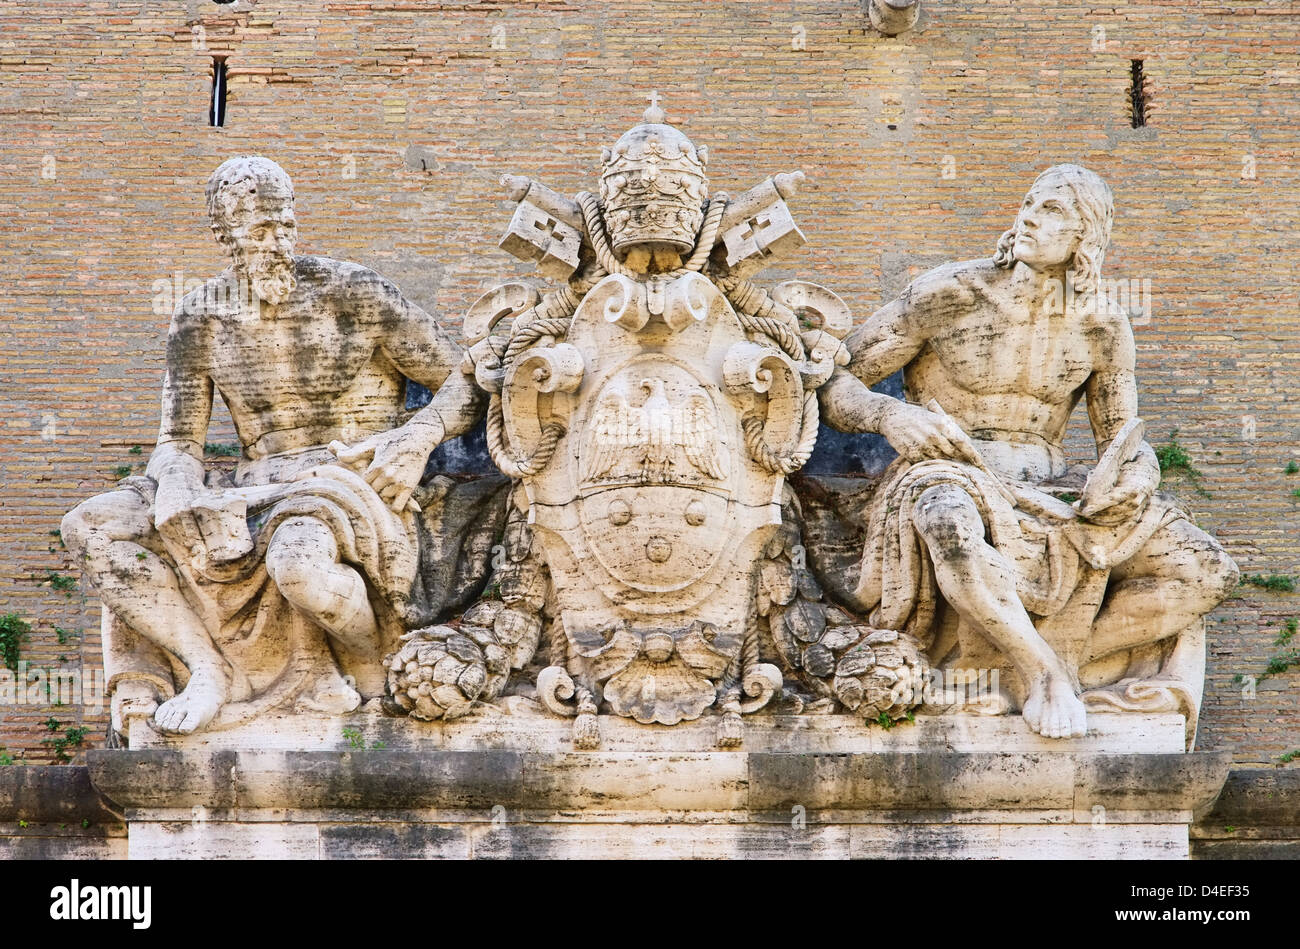 Rom Vatikan Eingangsskulptur - Roma scultura sopra ingresso dal Vaticano 01 Foto Stock